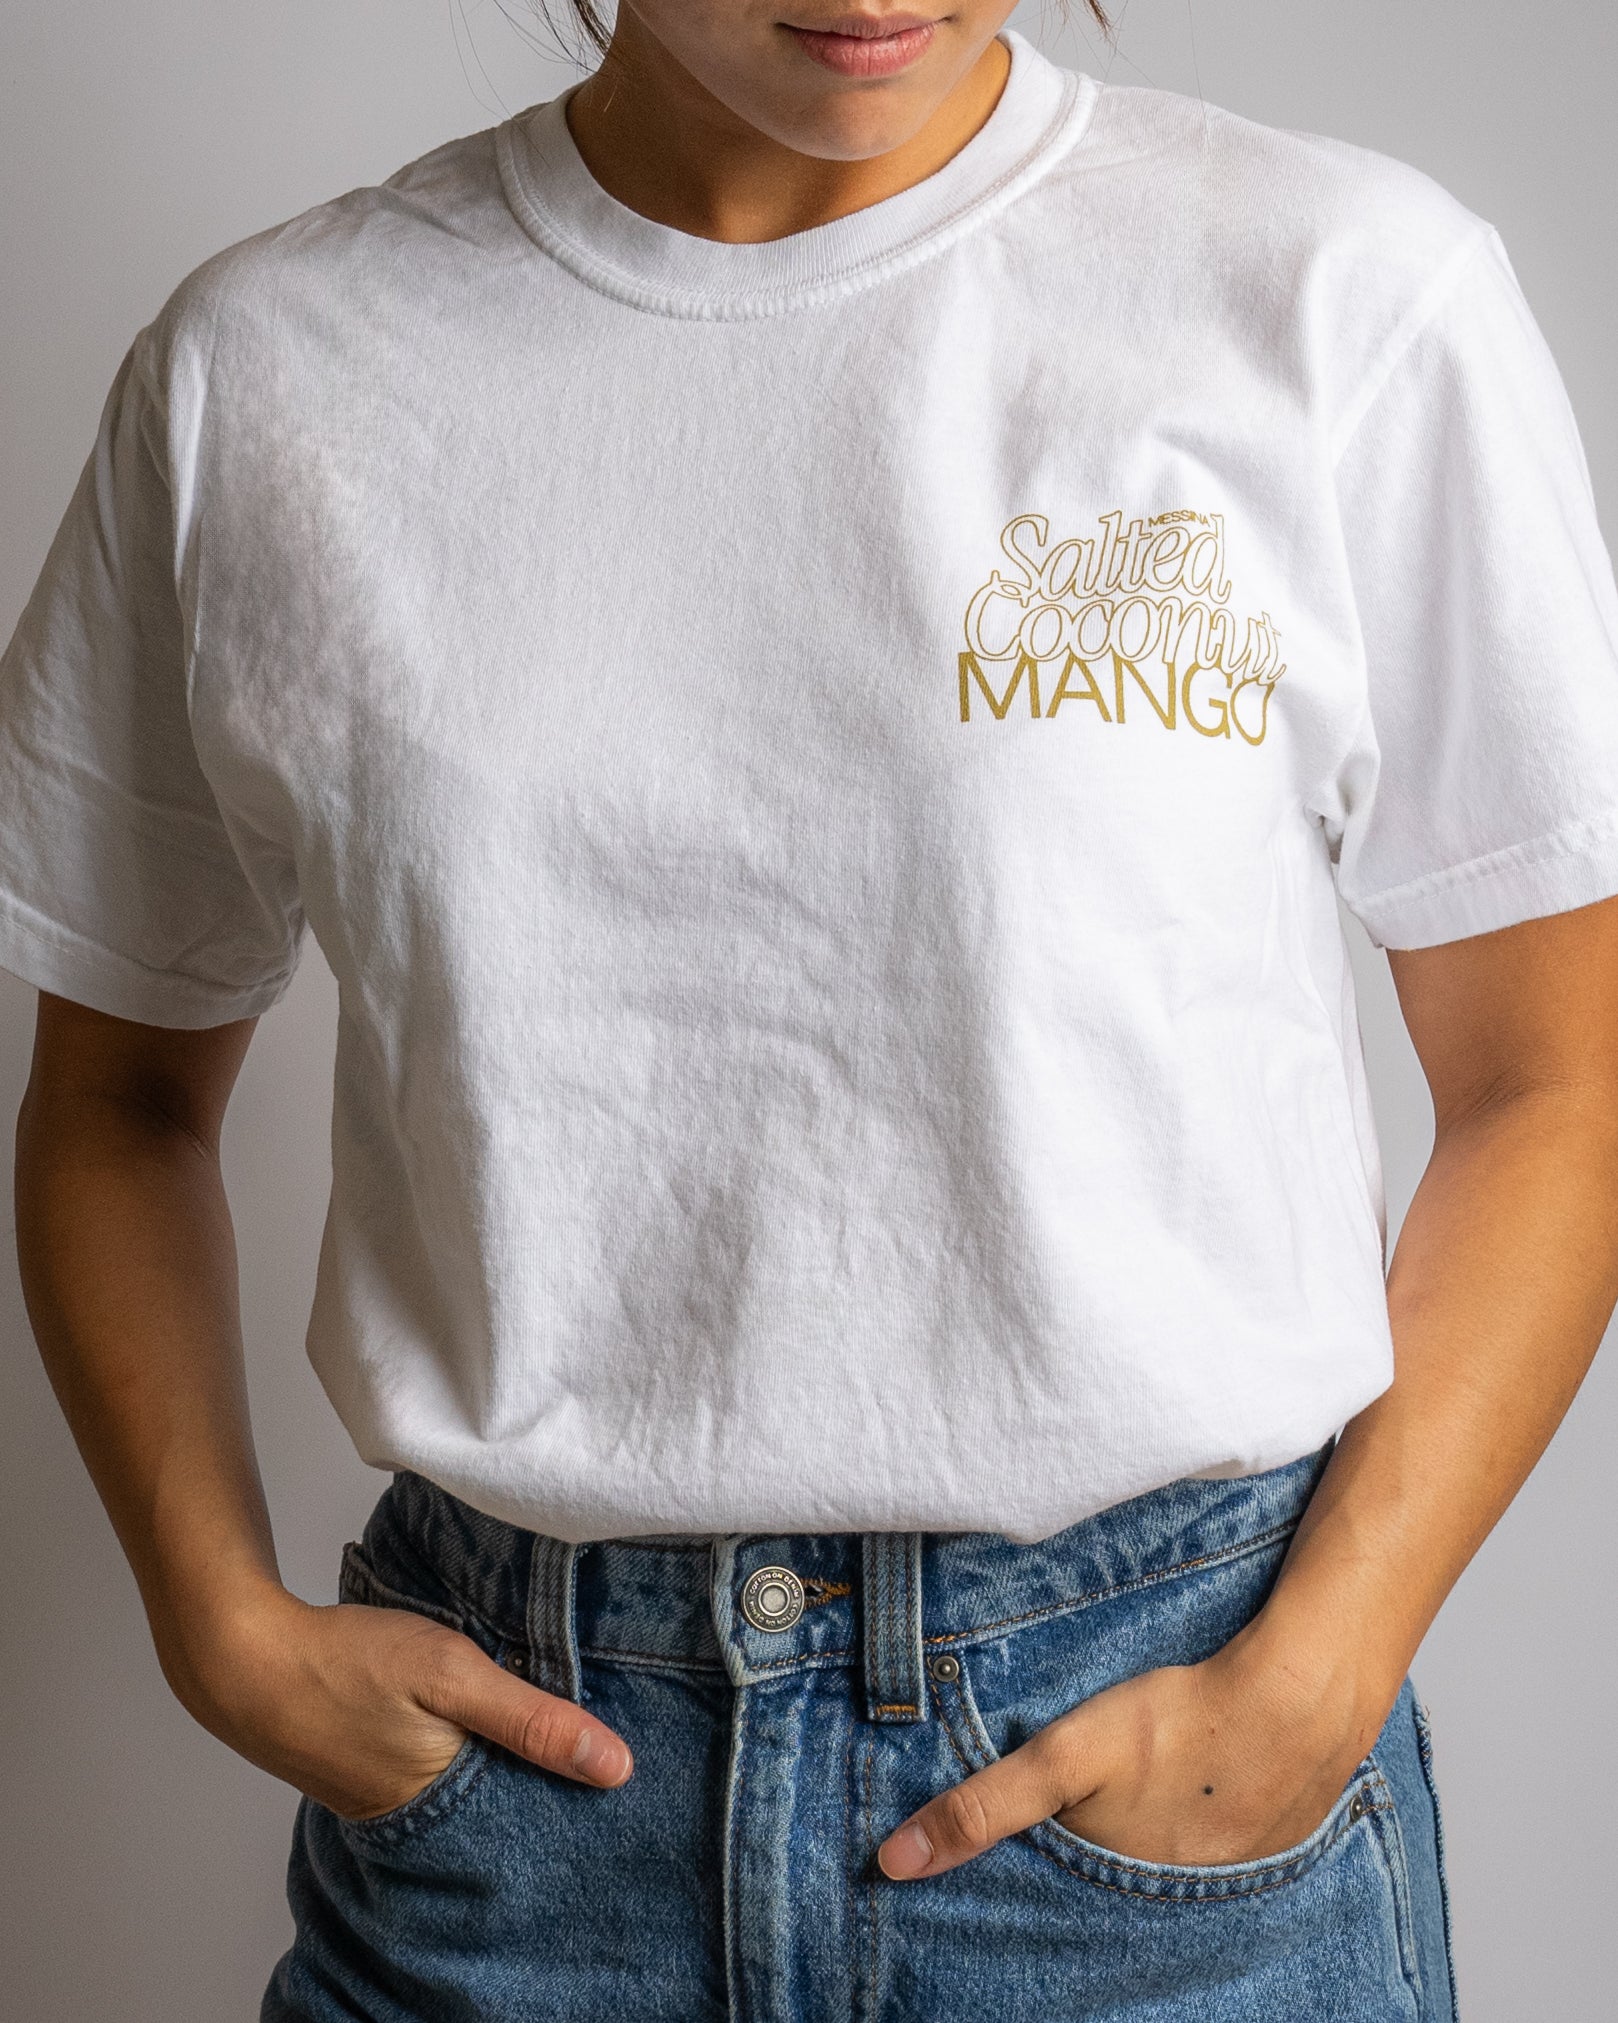 Salted Coconut Mango - Classics T-Shirt